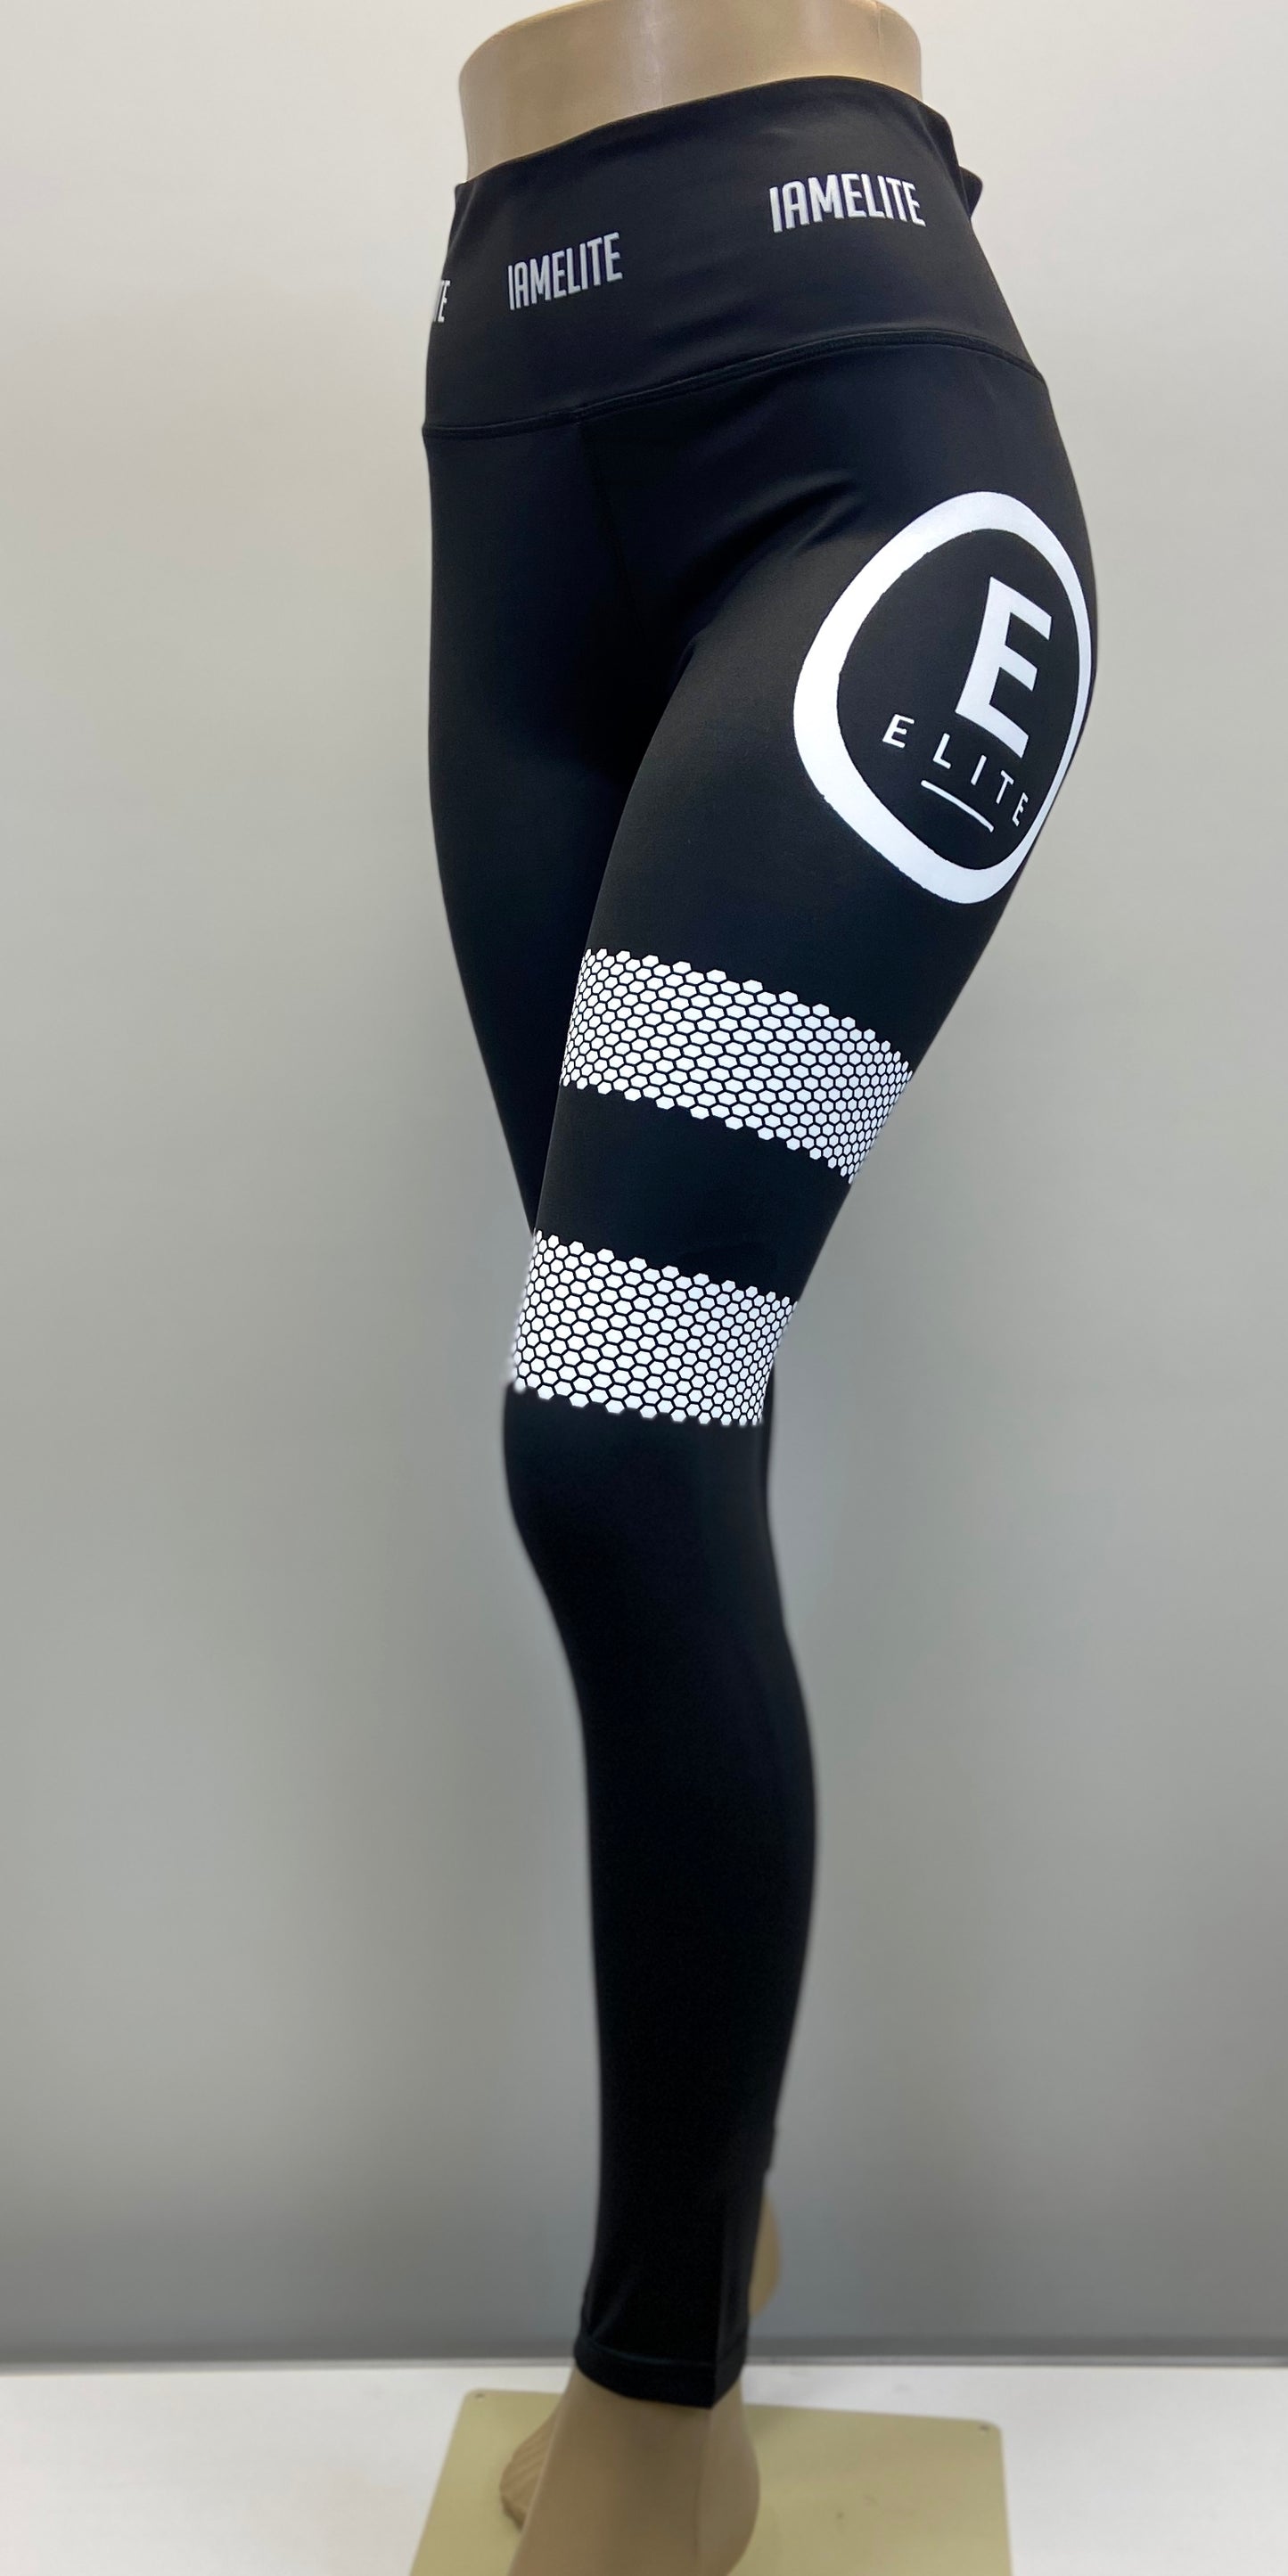 IAMELITE® Official IAE V3 Women Athletic Leggings / Yoga pants